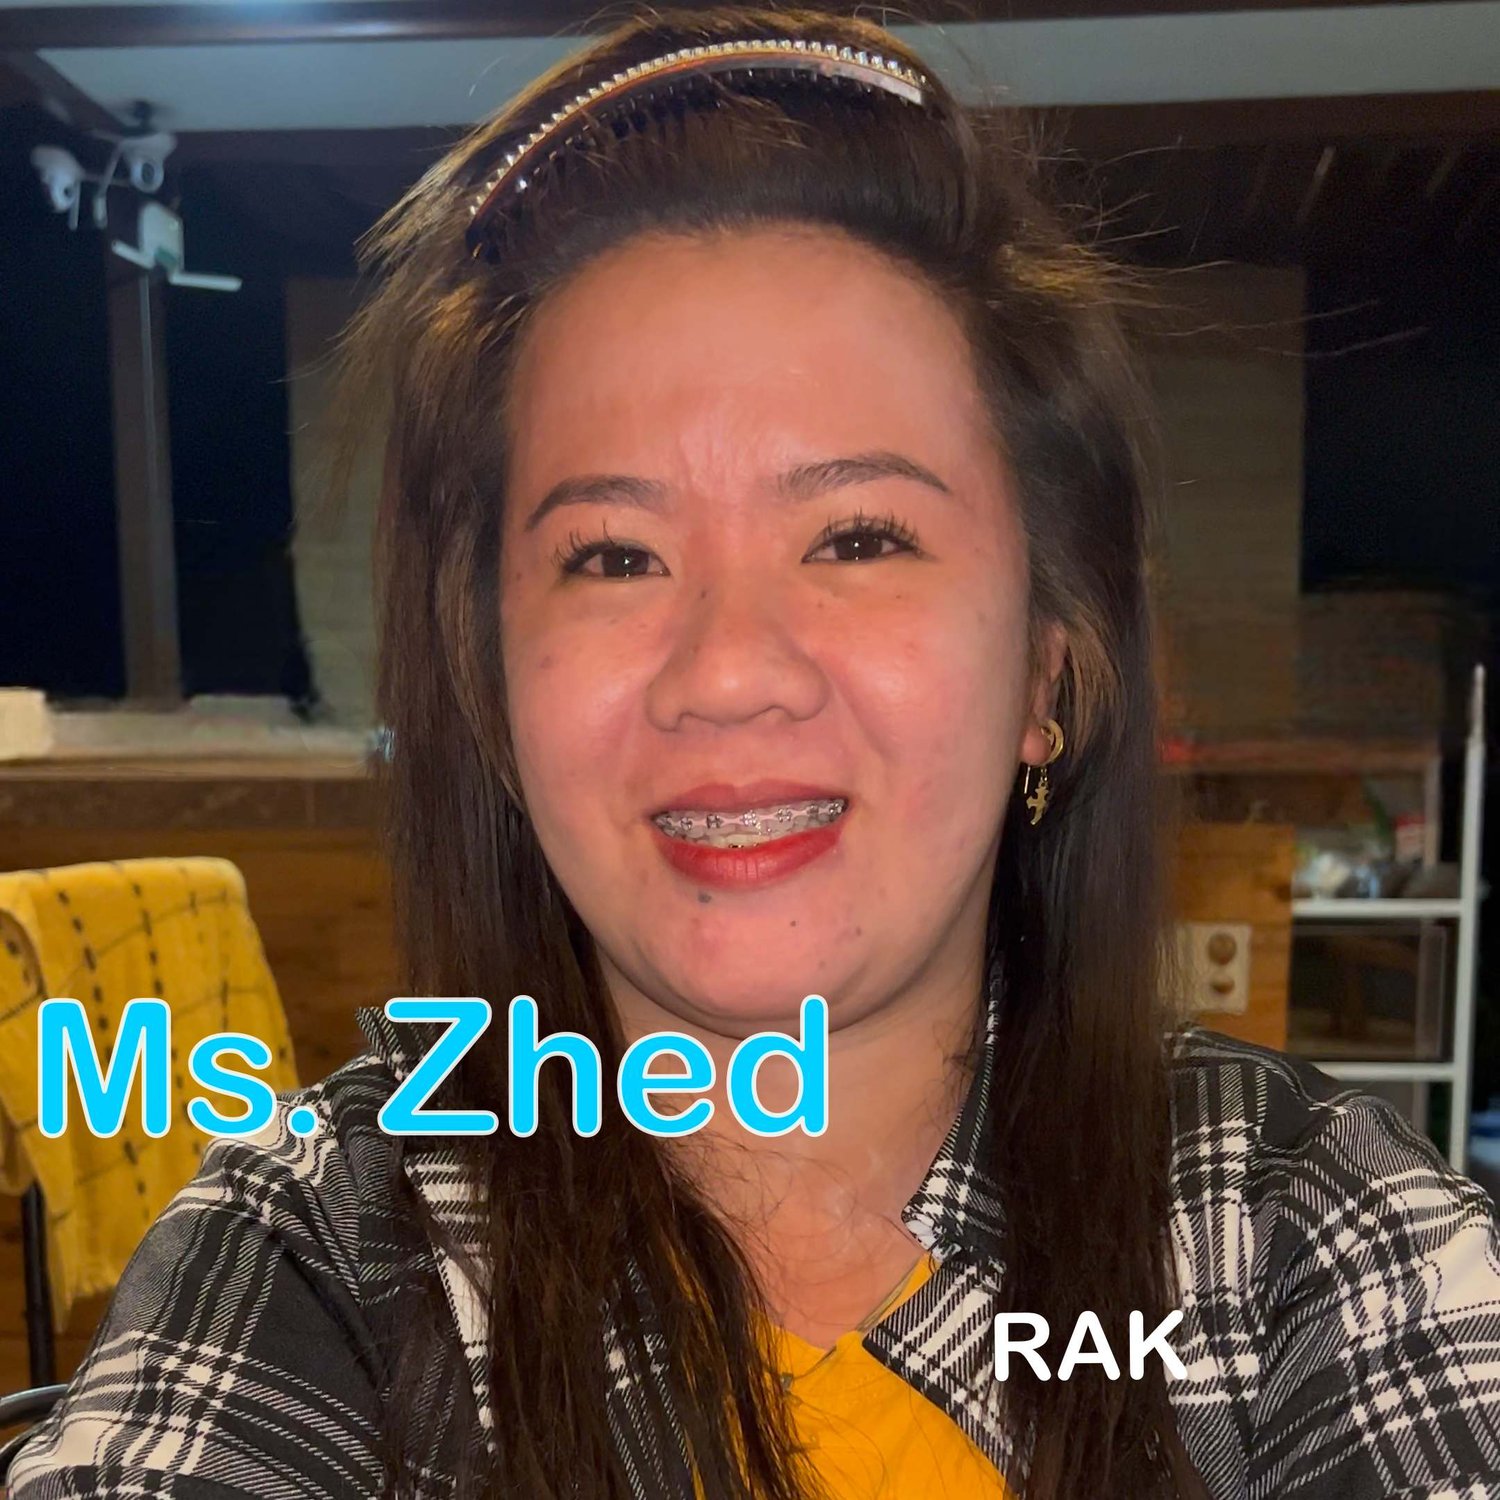 Ms. Zhed RAK amputee